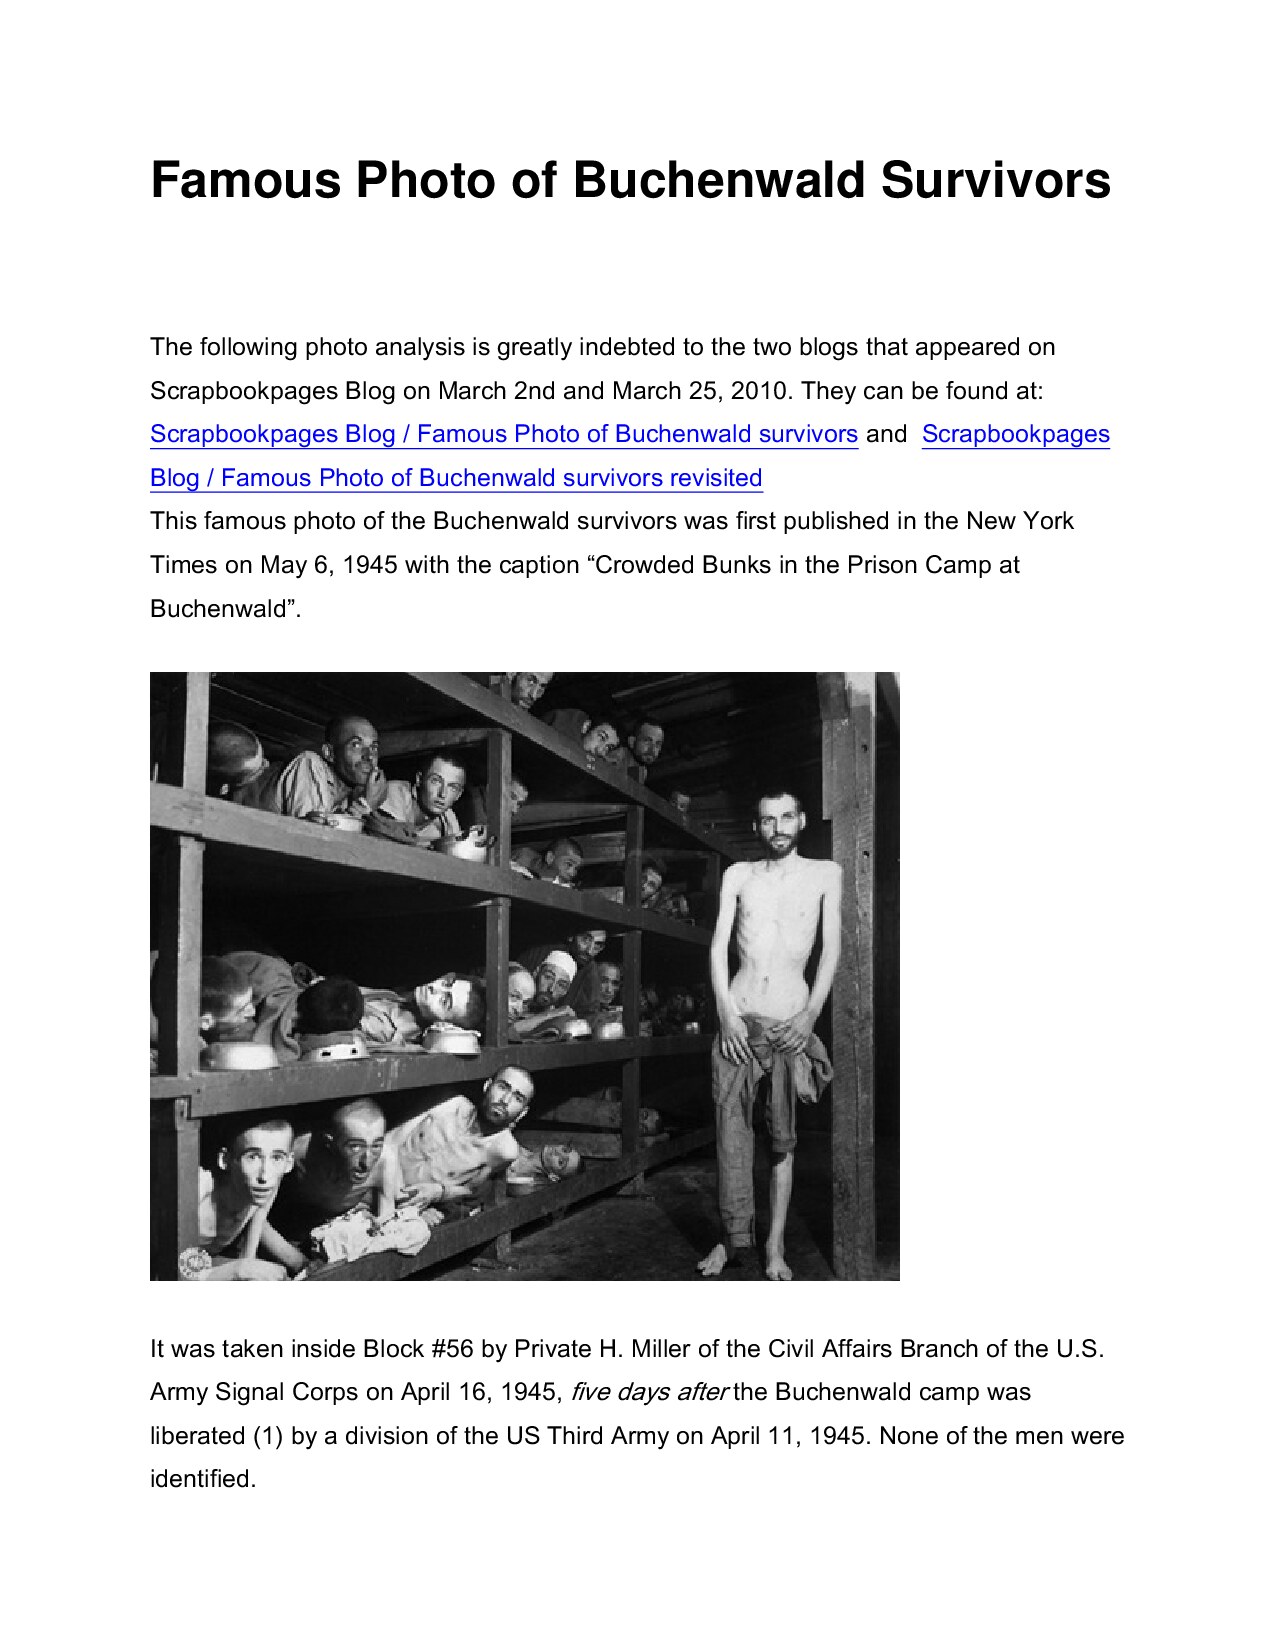 Microsoft Word - Famous Photo of Buchenwald Survivors.doc